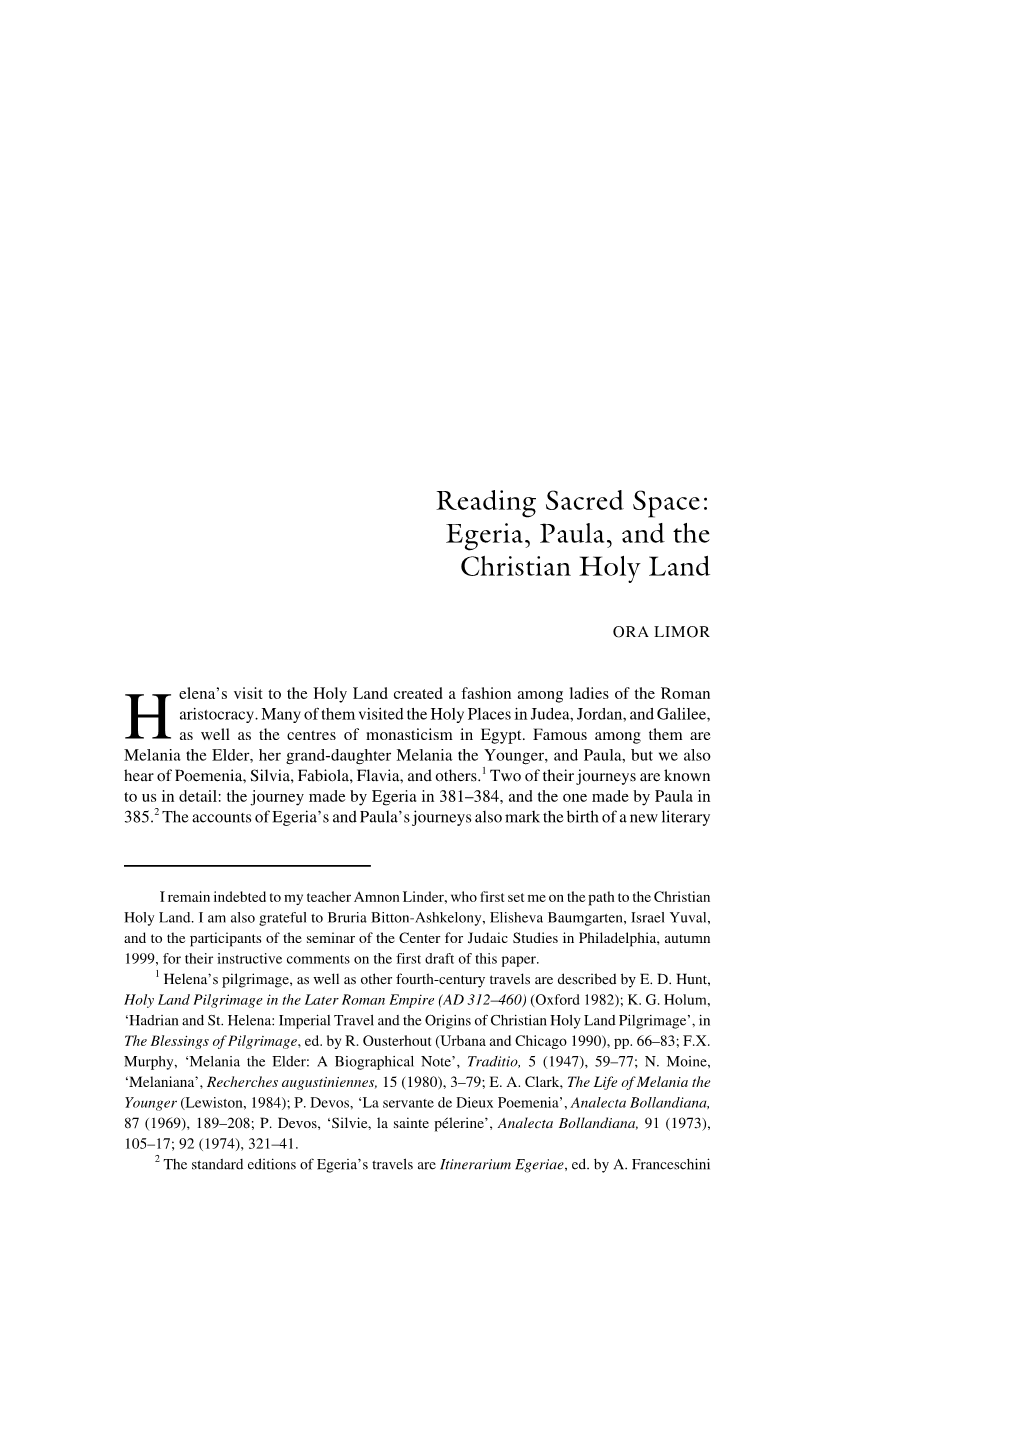 Reading Sacred Space: Egeria, Paula, and the Christian Holy Land